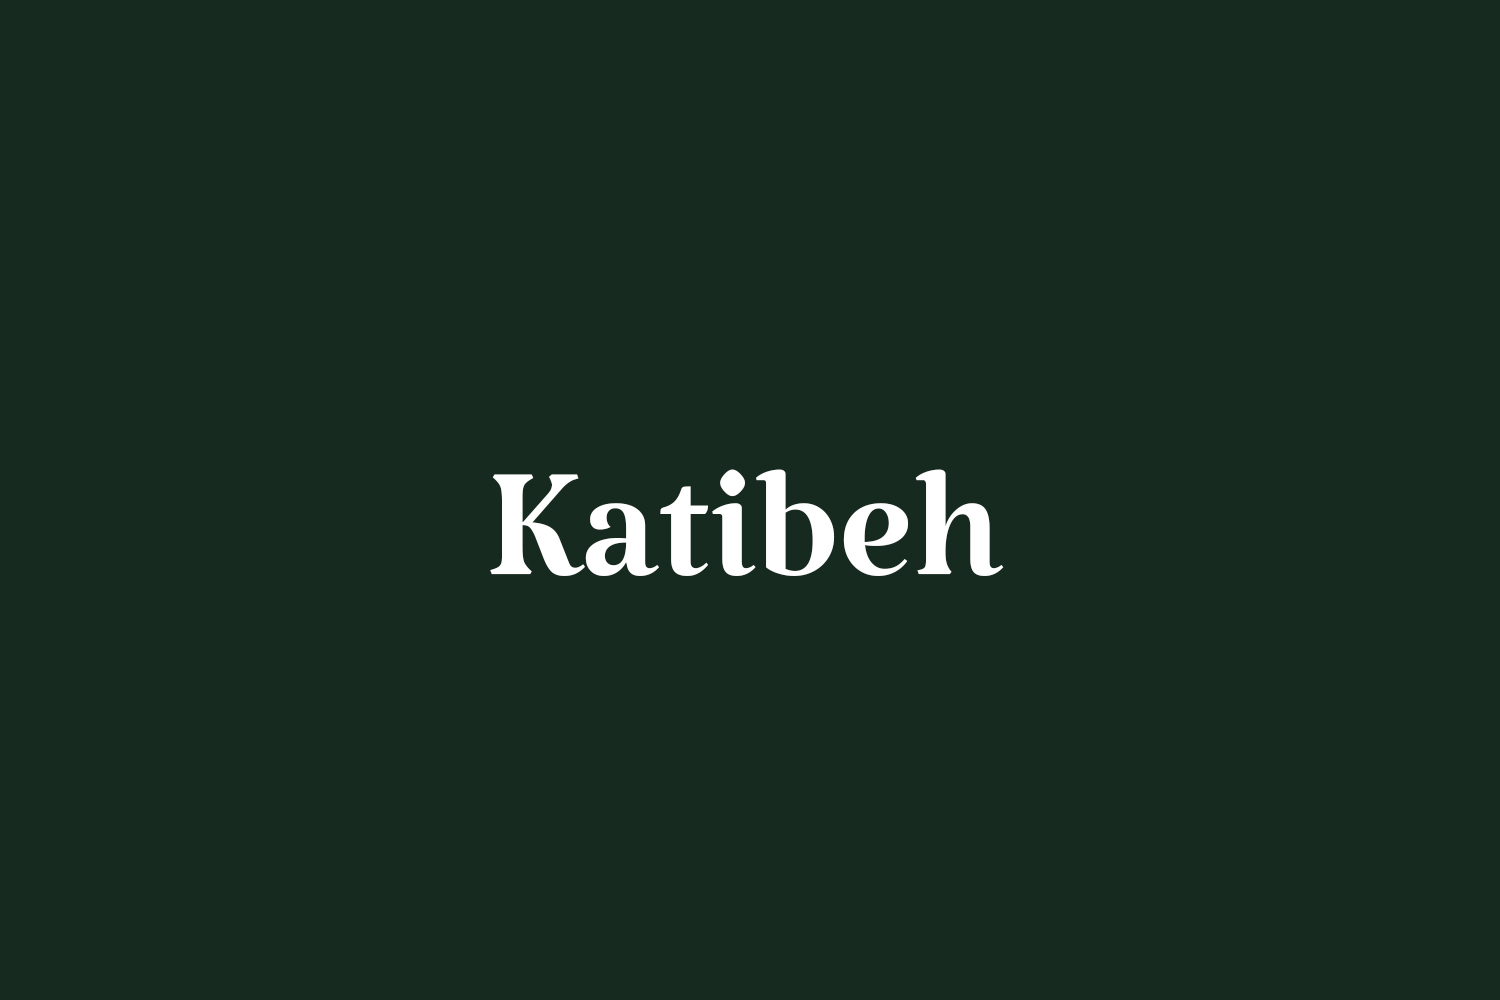 Katibeh